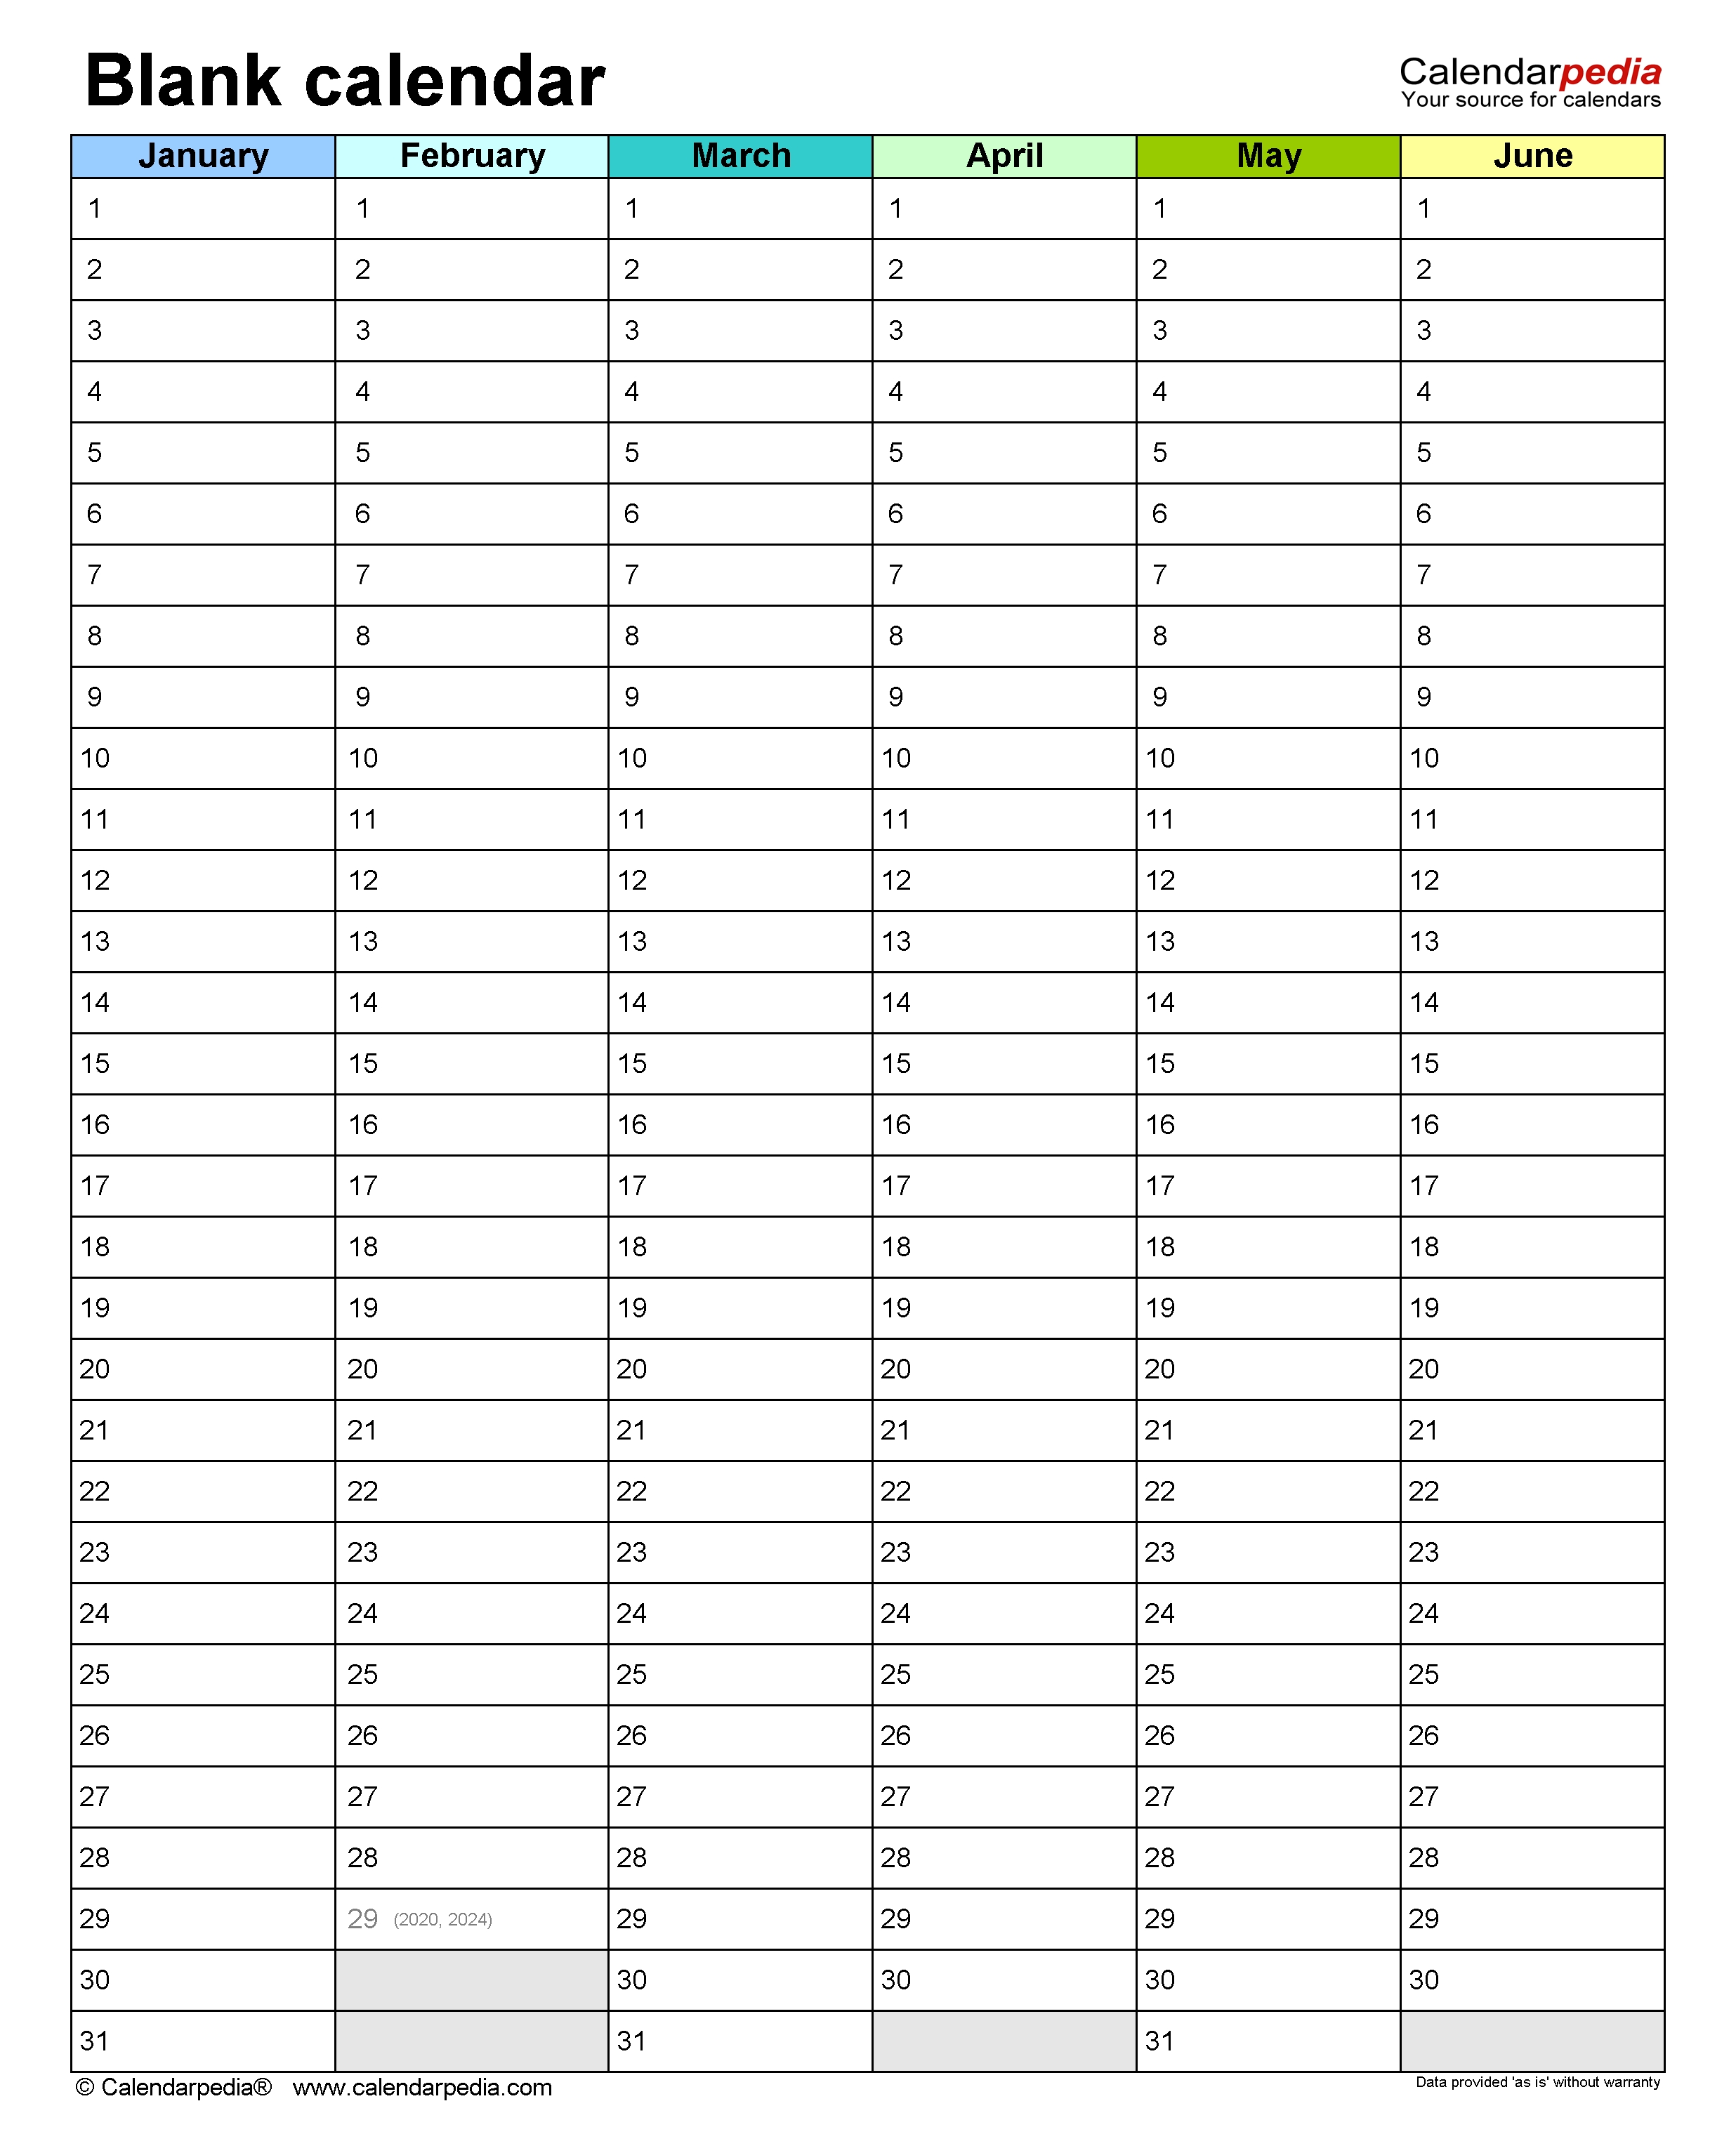 Blank Calendars - Free Printable Microsoft Excel Templates Calendar Template Excel 2007 Free